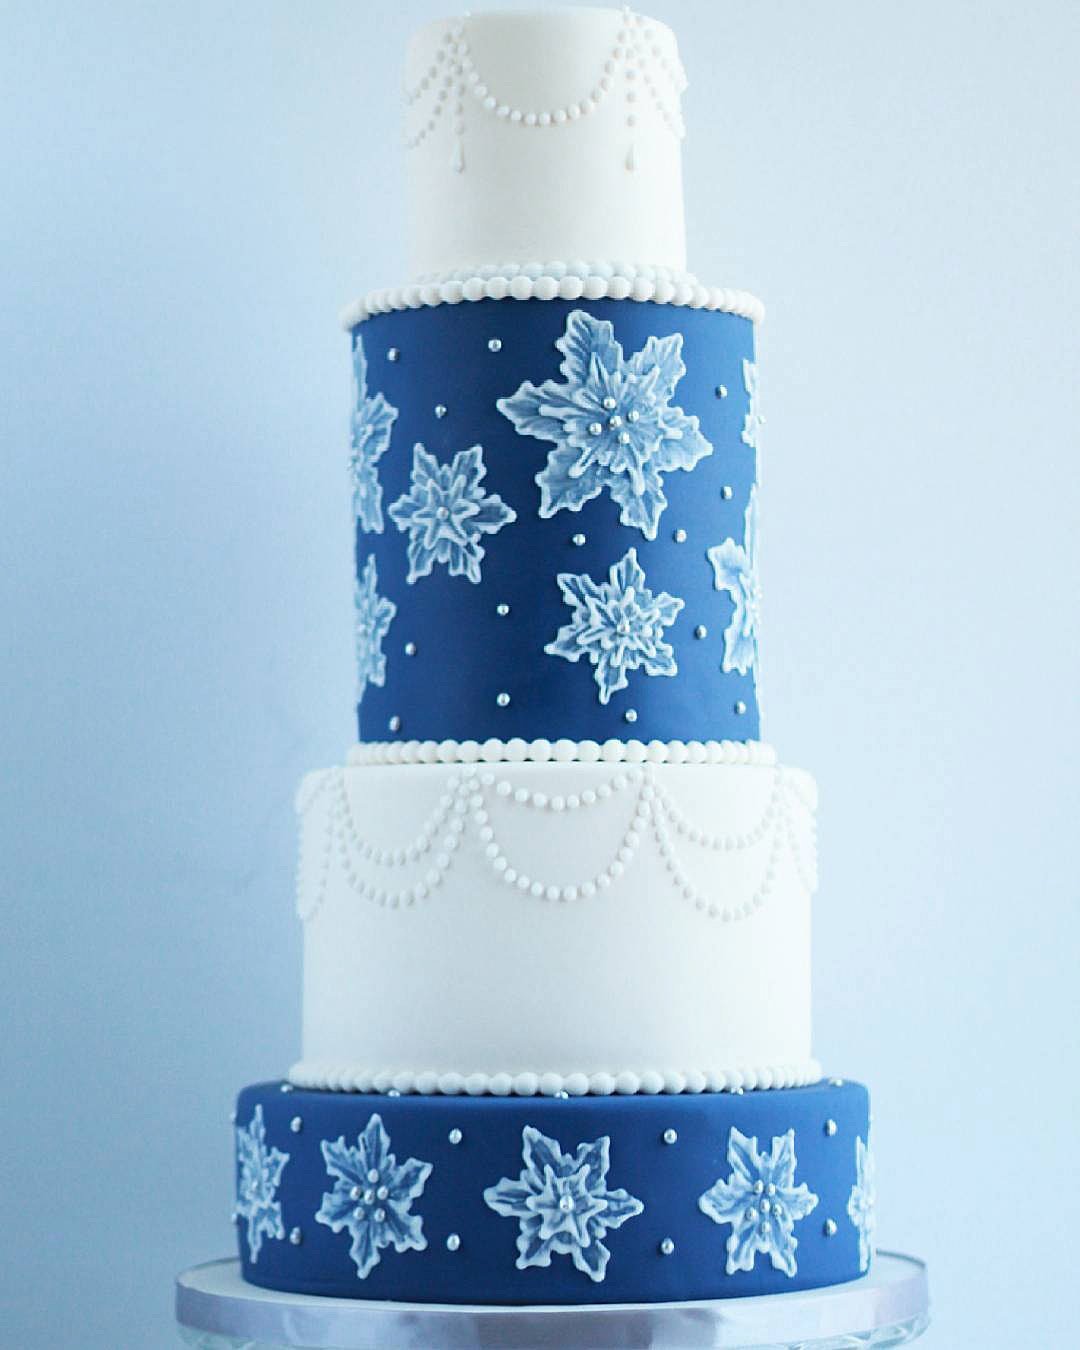 winter wedding cakes white and blue decor cake